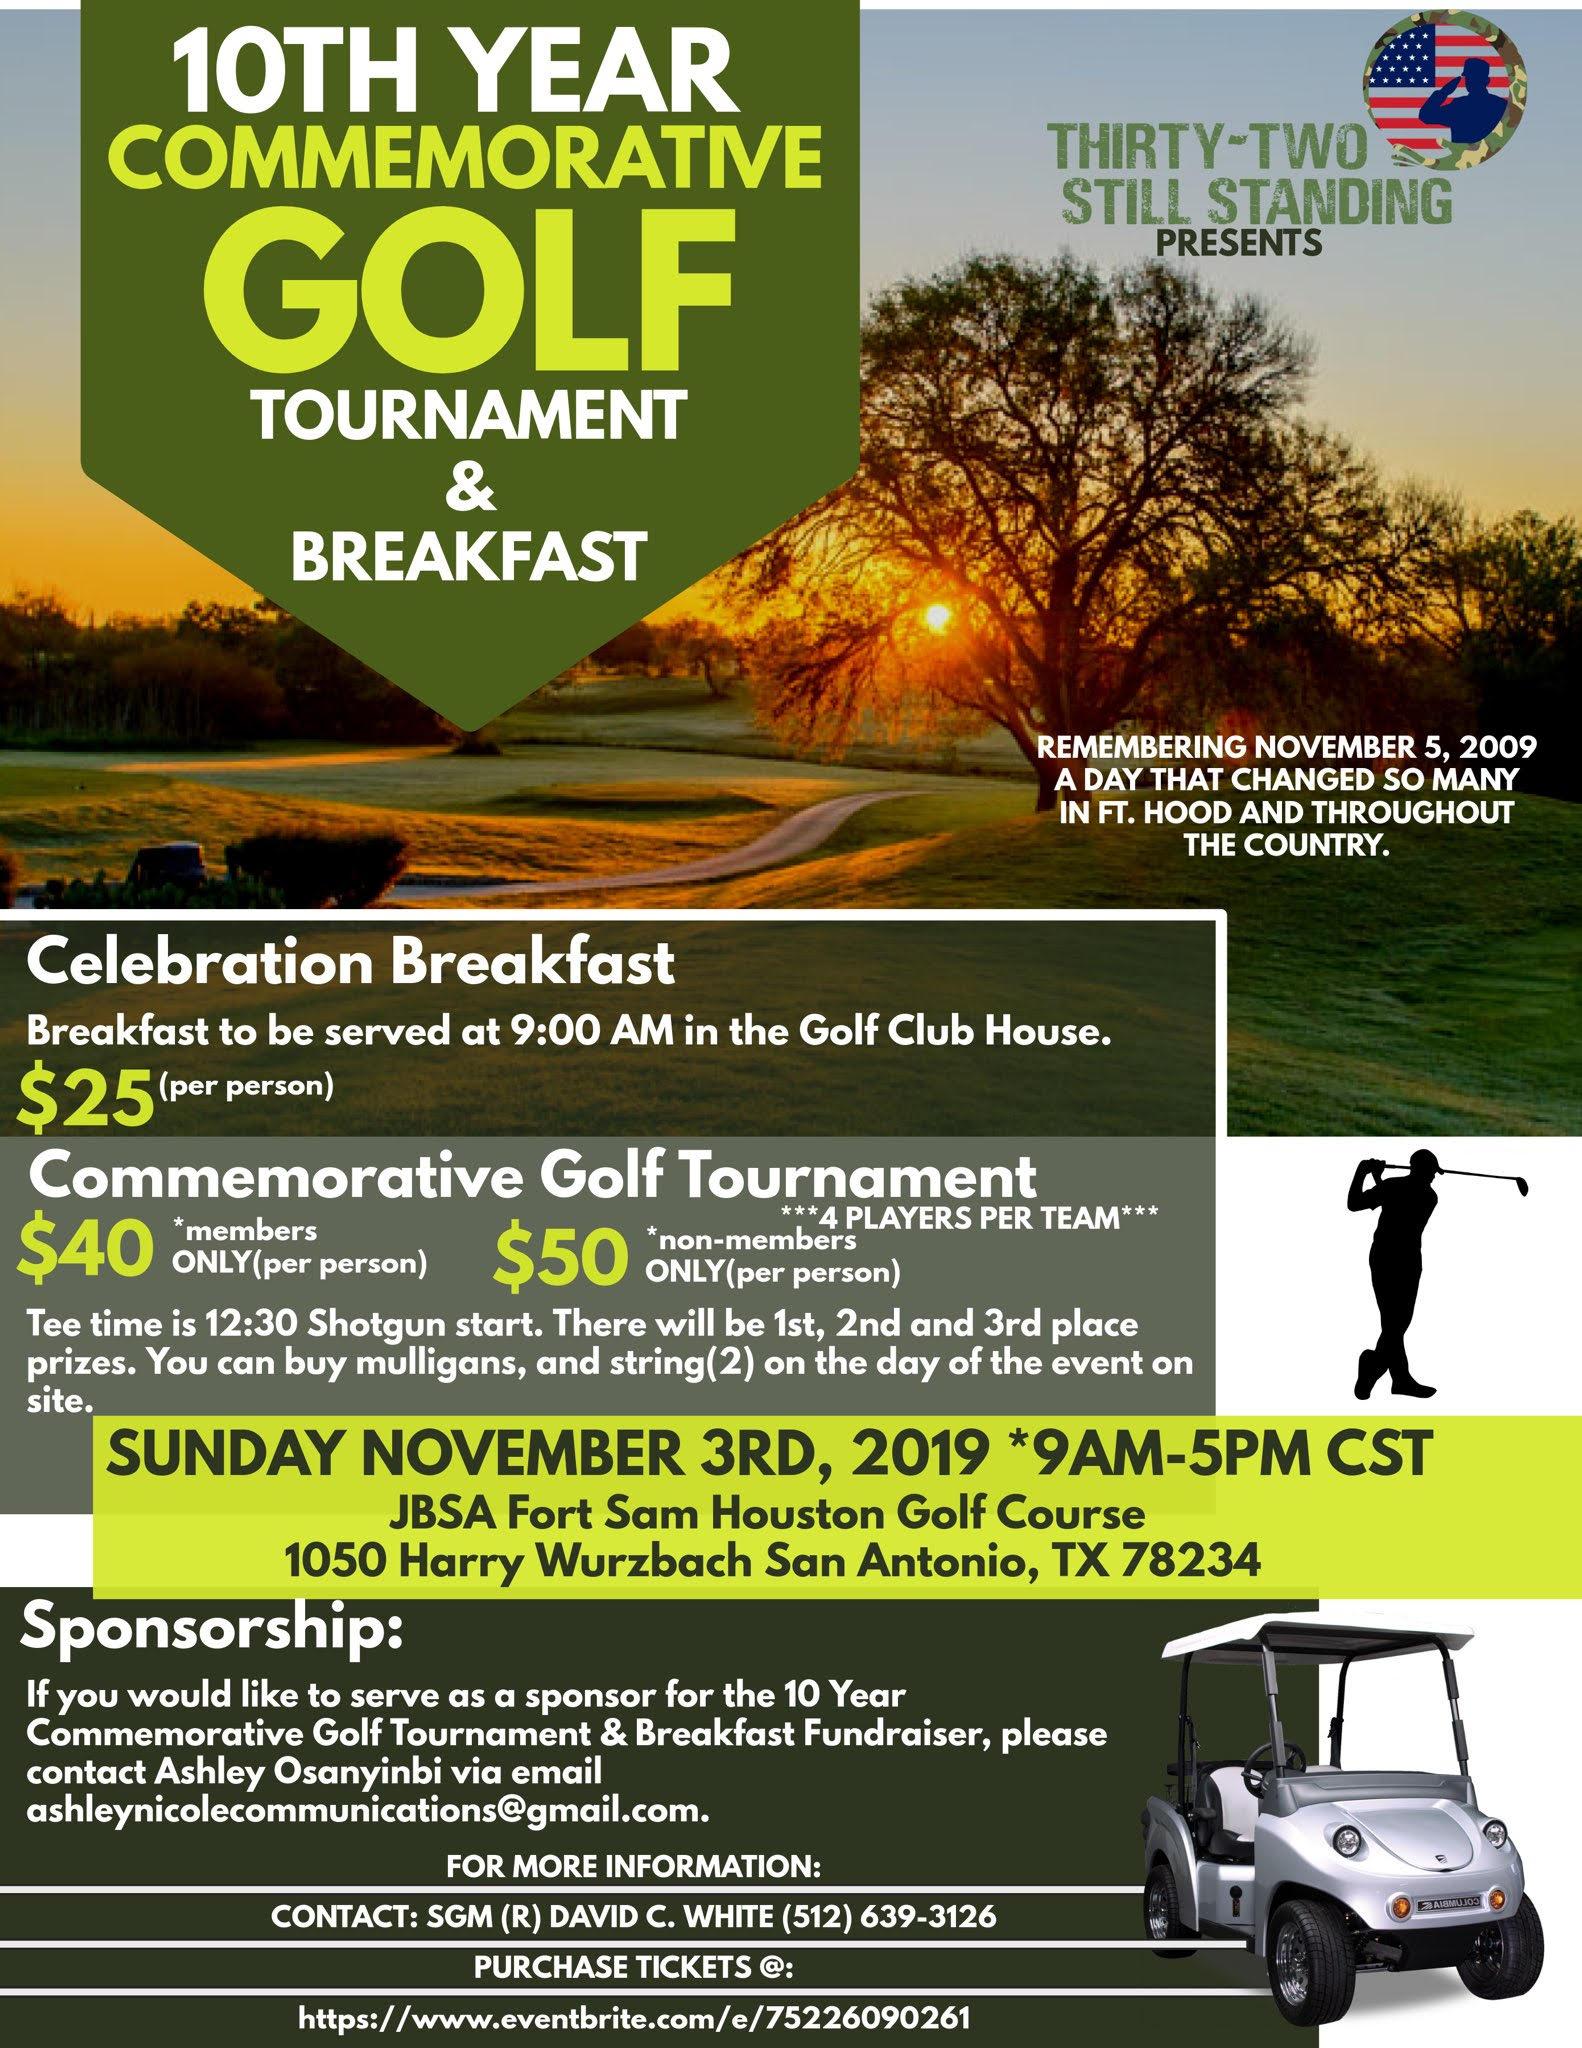 Thirty-Two Still Standing 10 Year Commemorative Golf Tournament & Breakfast Fundraiser